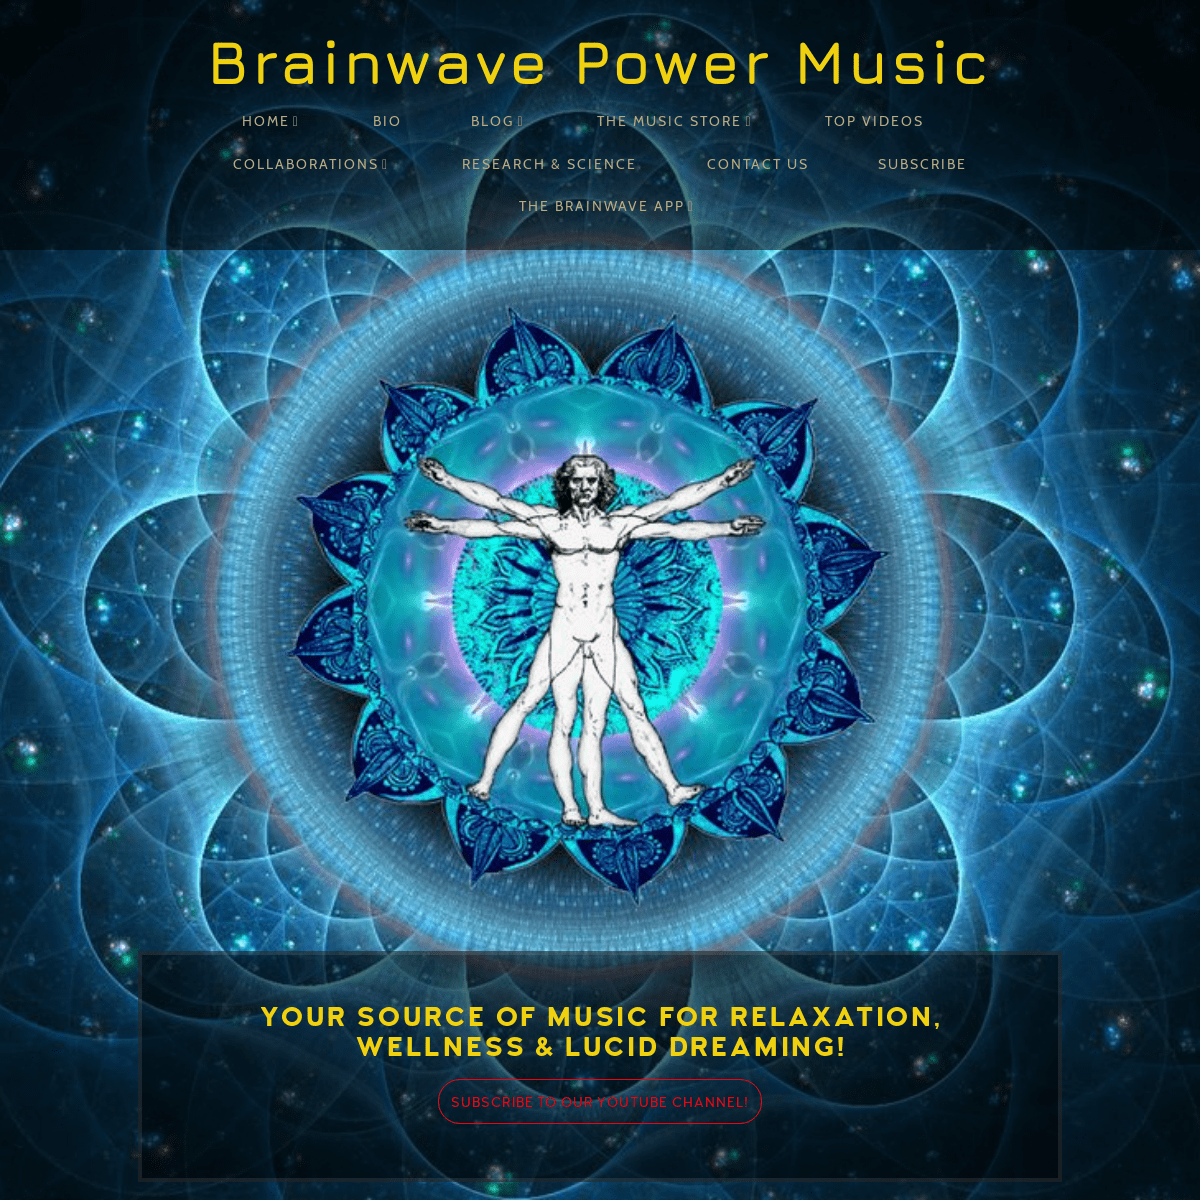 A complete backup of brainwavepowermusic.com